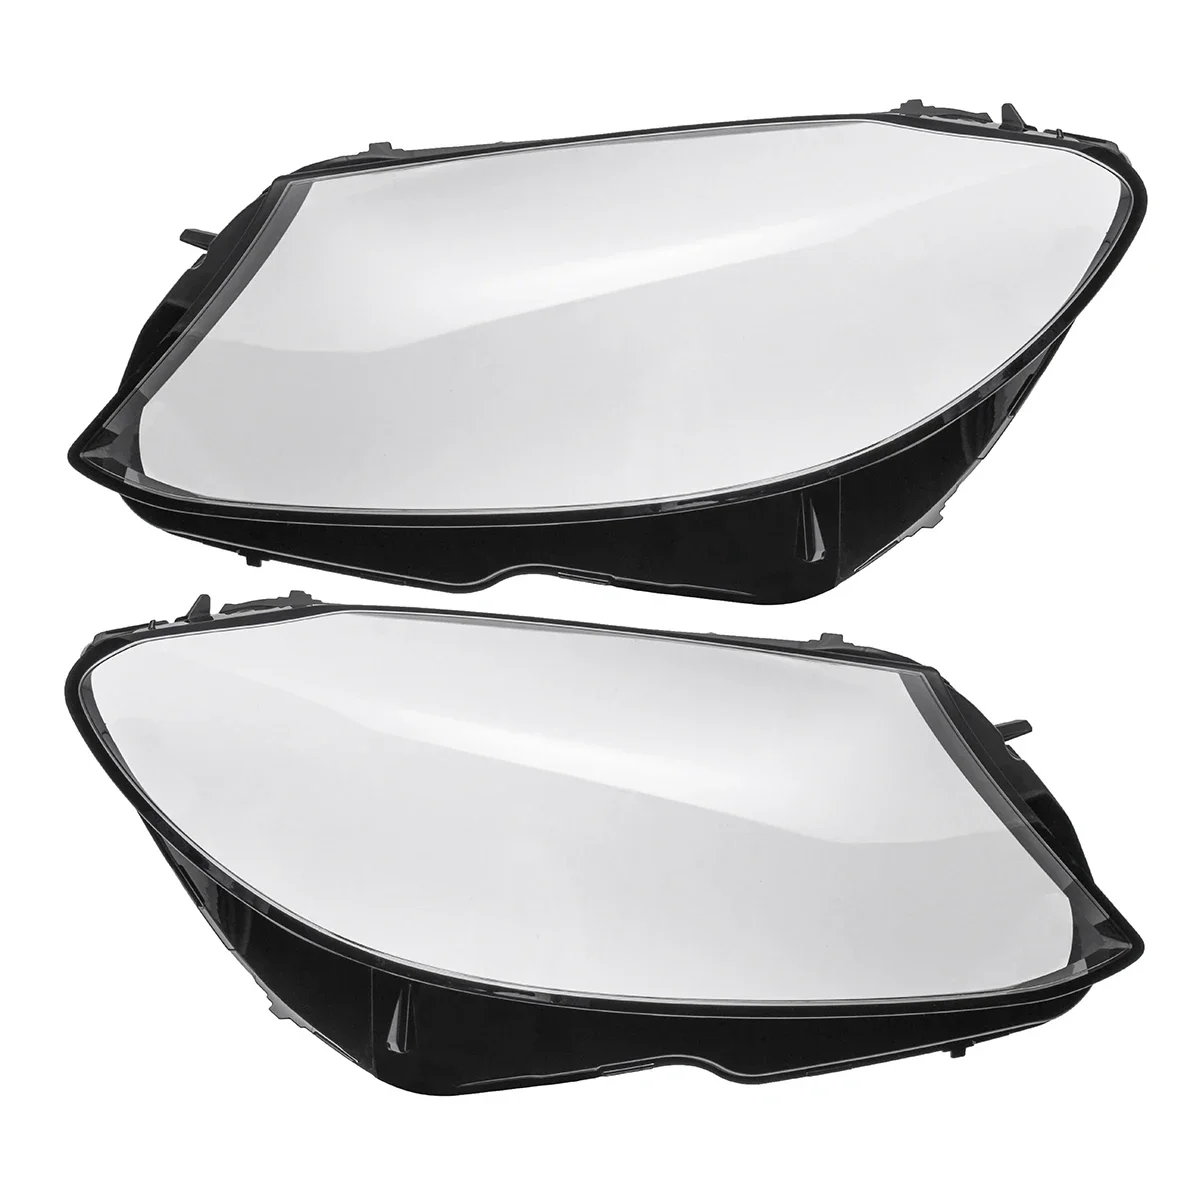 L / R Car Headlamp Cover Transparent Lampshade Headlight Lens Shell For Mercedes Benz W205 C180 C200 C260L C280 C300 2015-2018